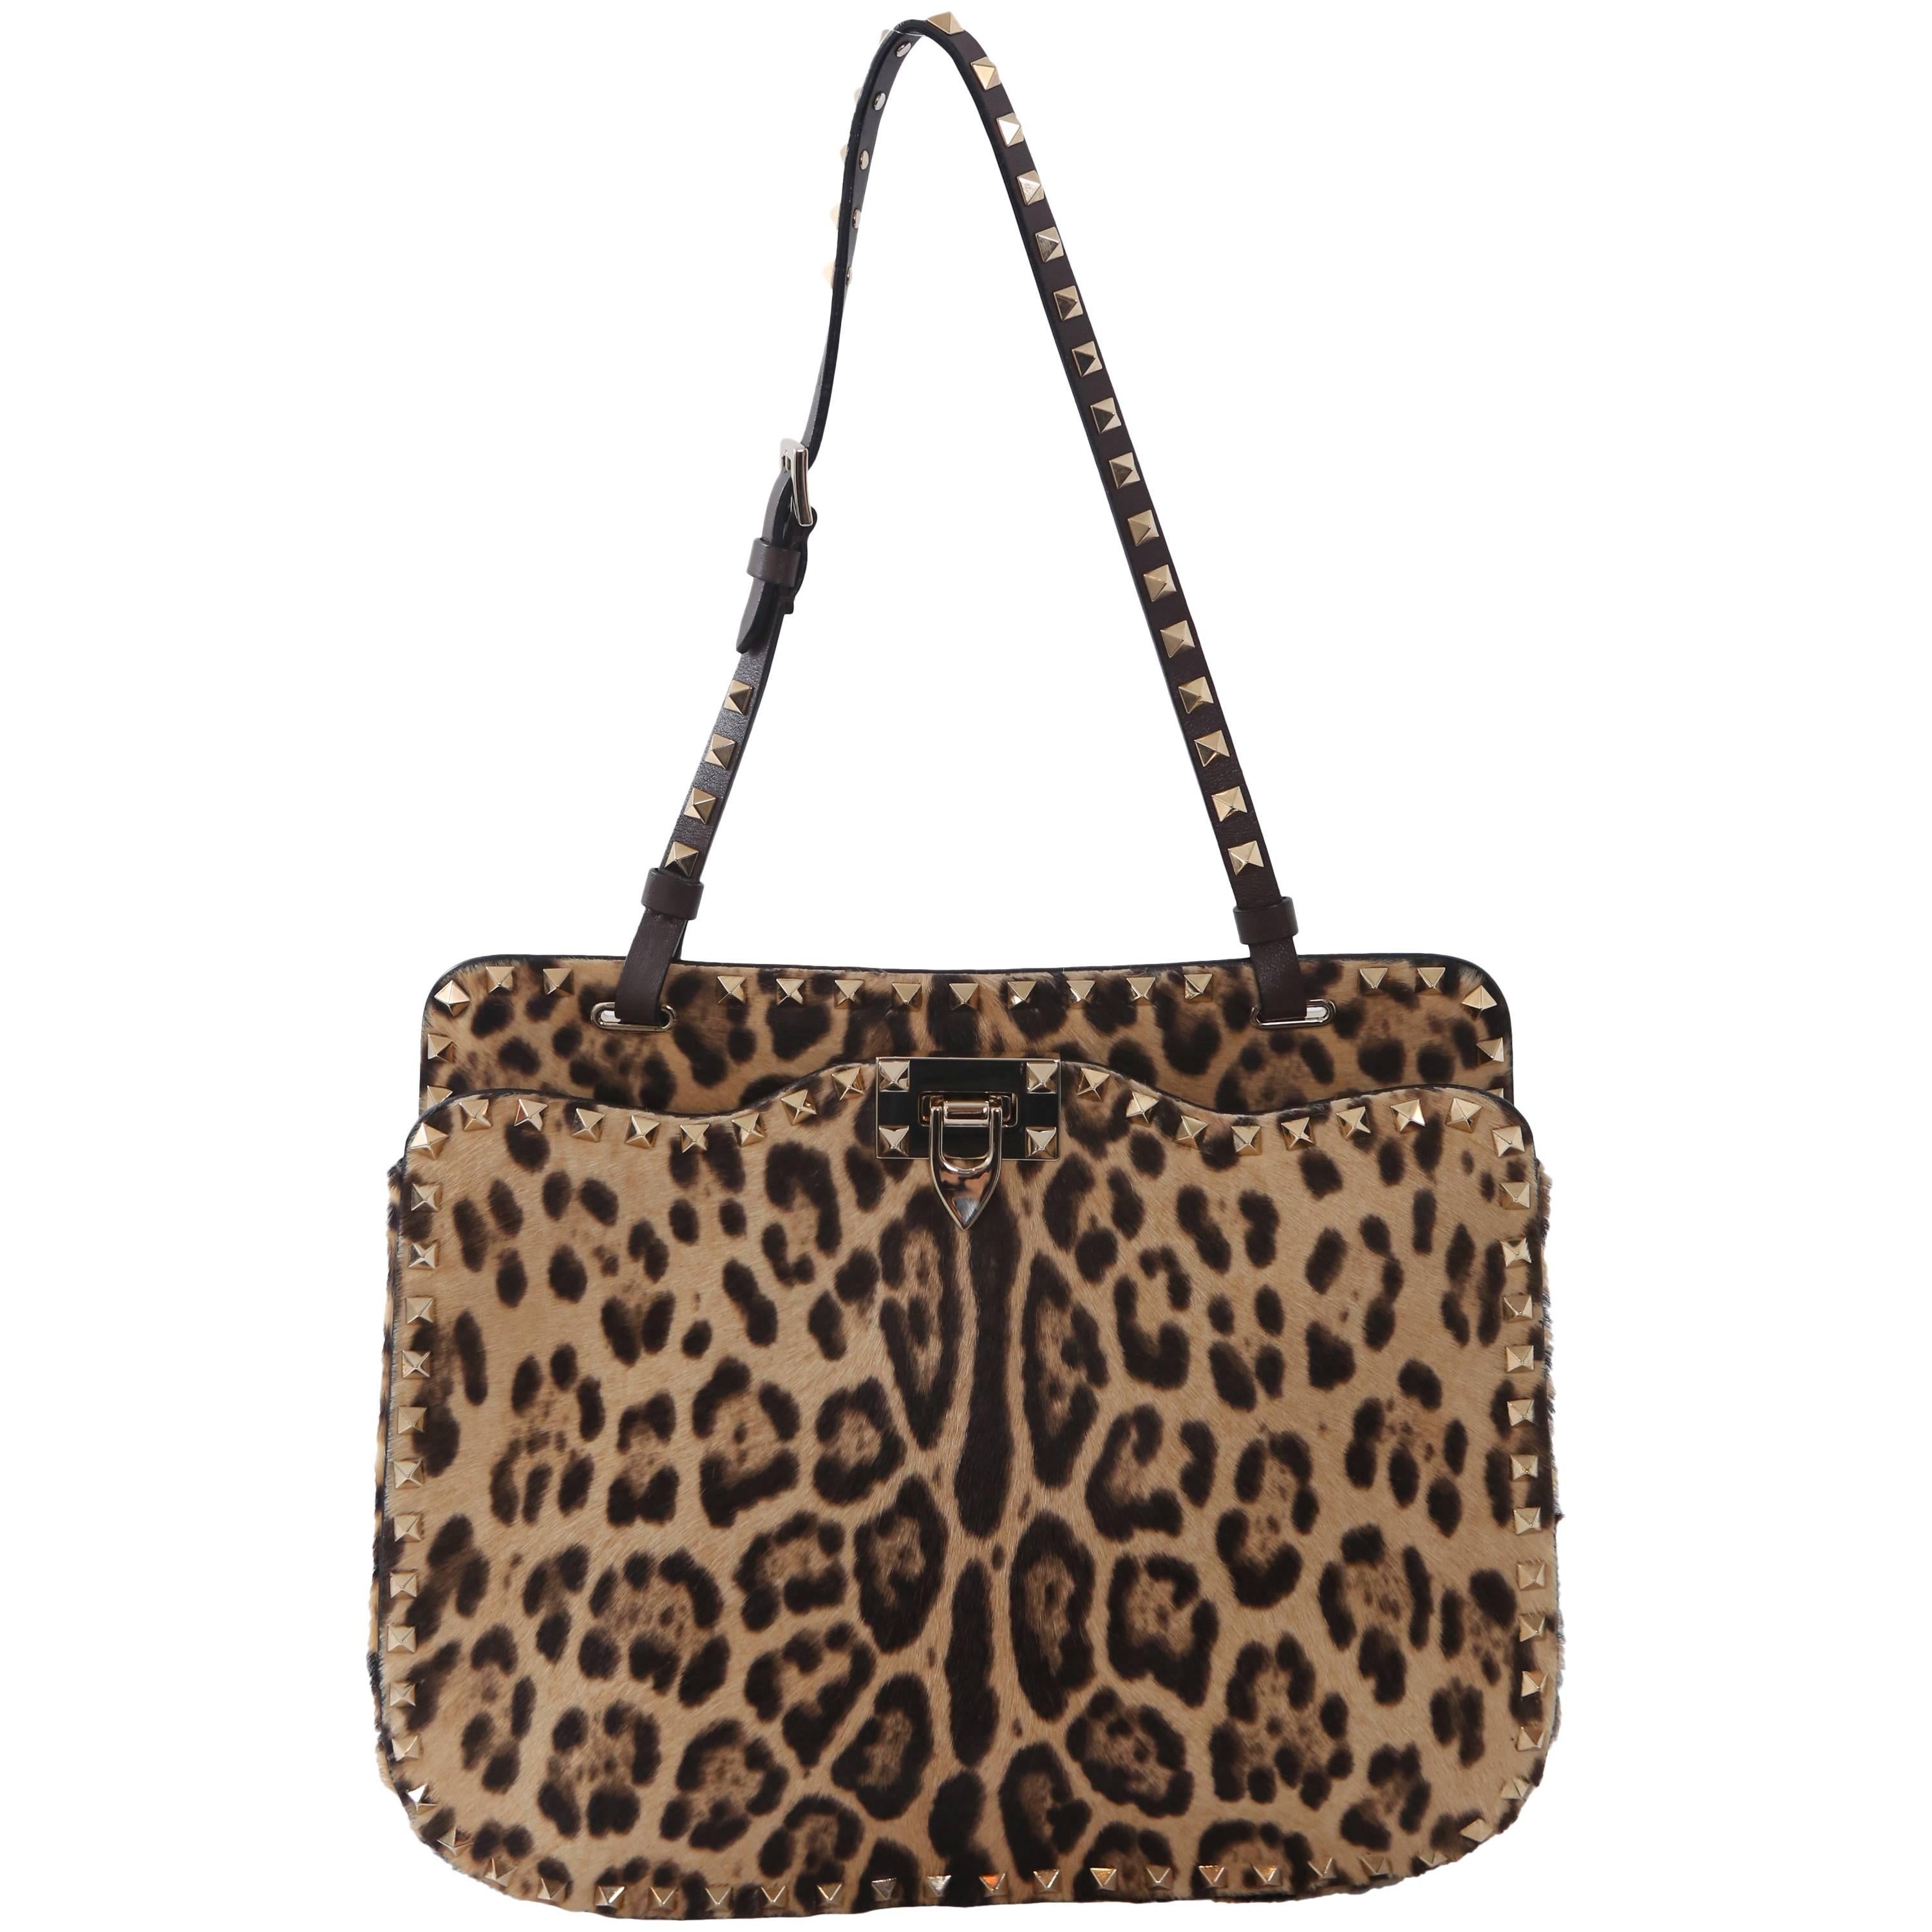 Valentino "Rockstud" Leopard Calf Hair Shoulder Bag